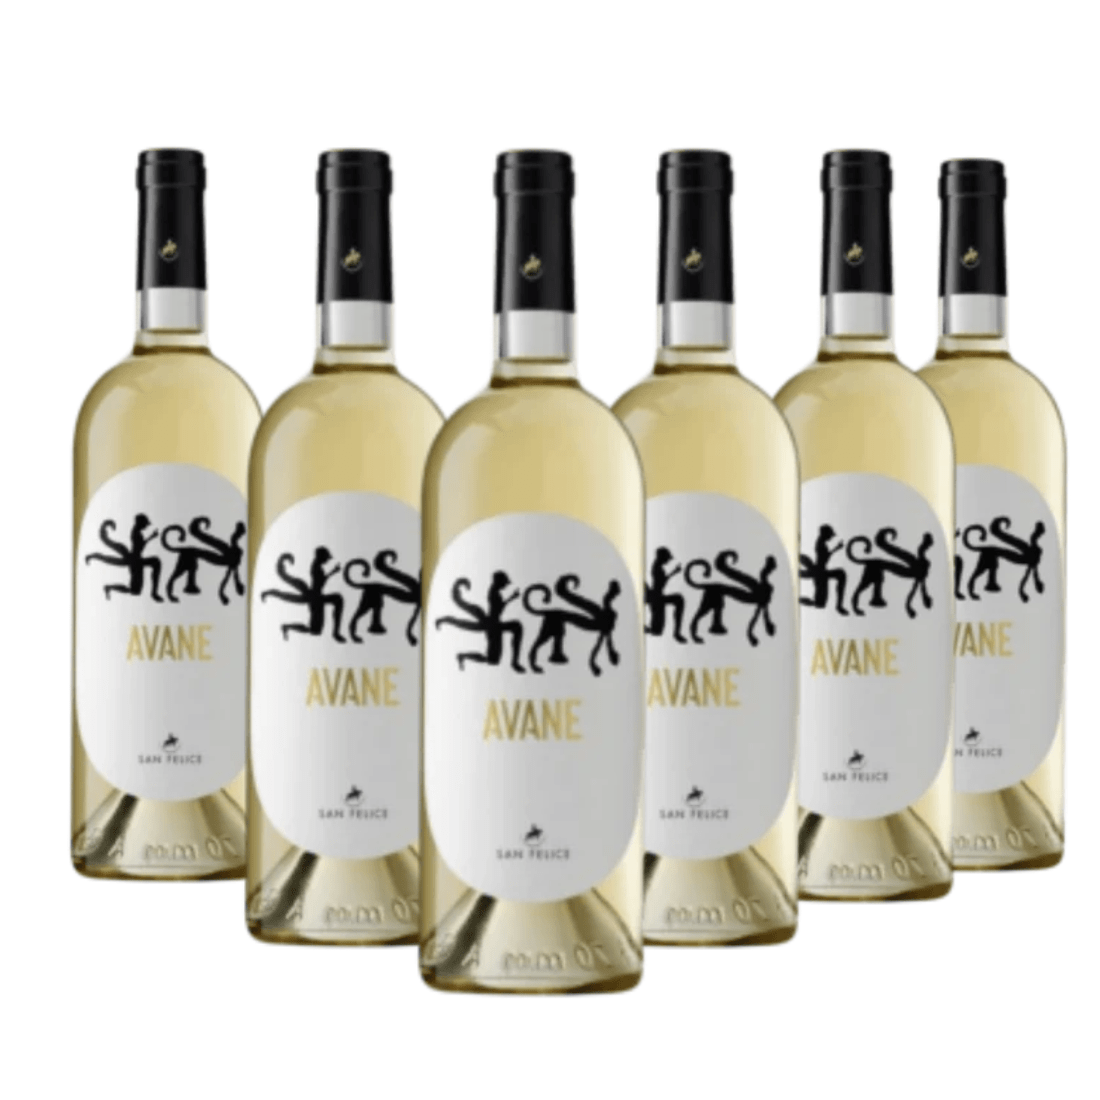 San Felice Chardonnay 2021 Igt Toscana Avane 6 bottiglie - San Felice